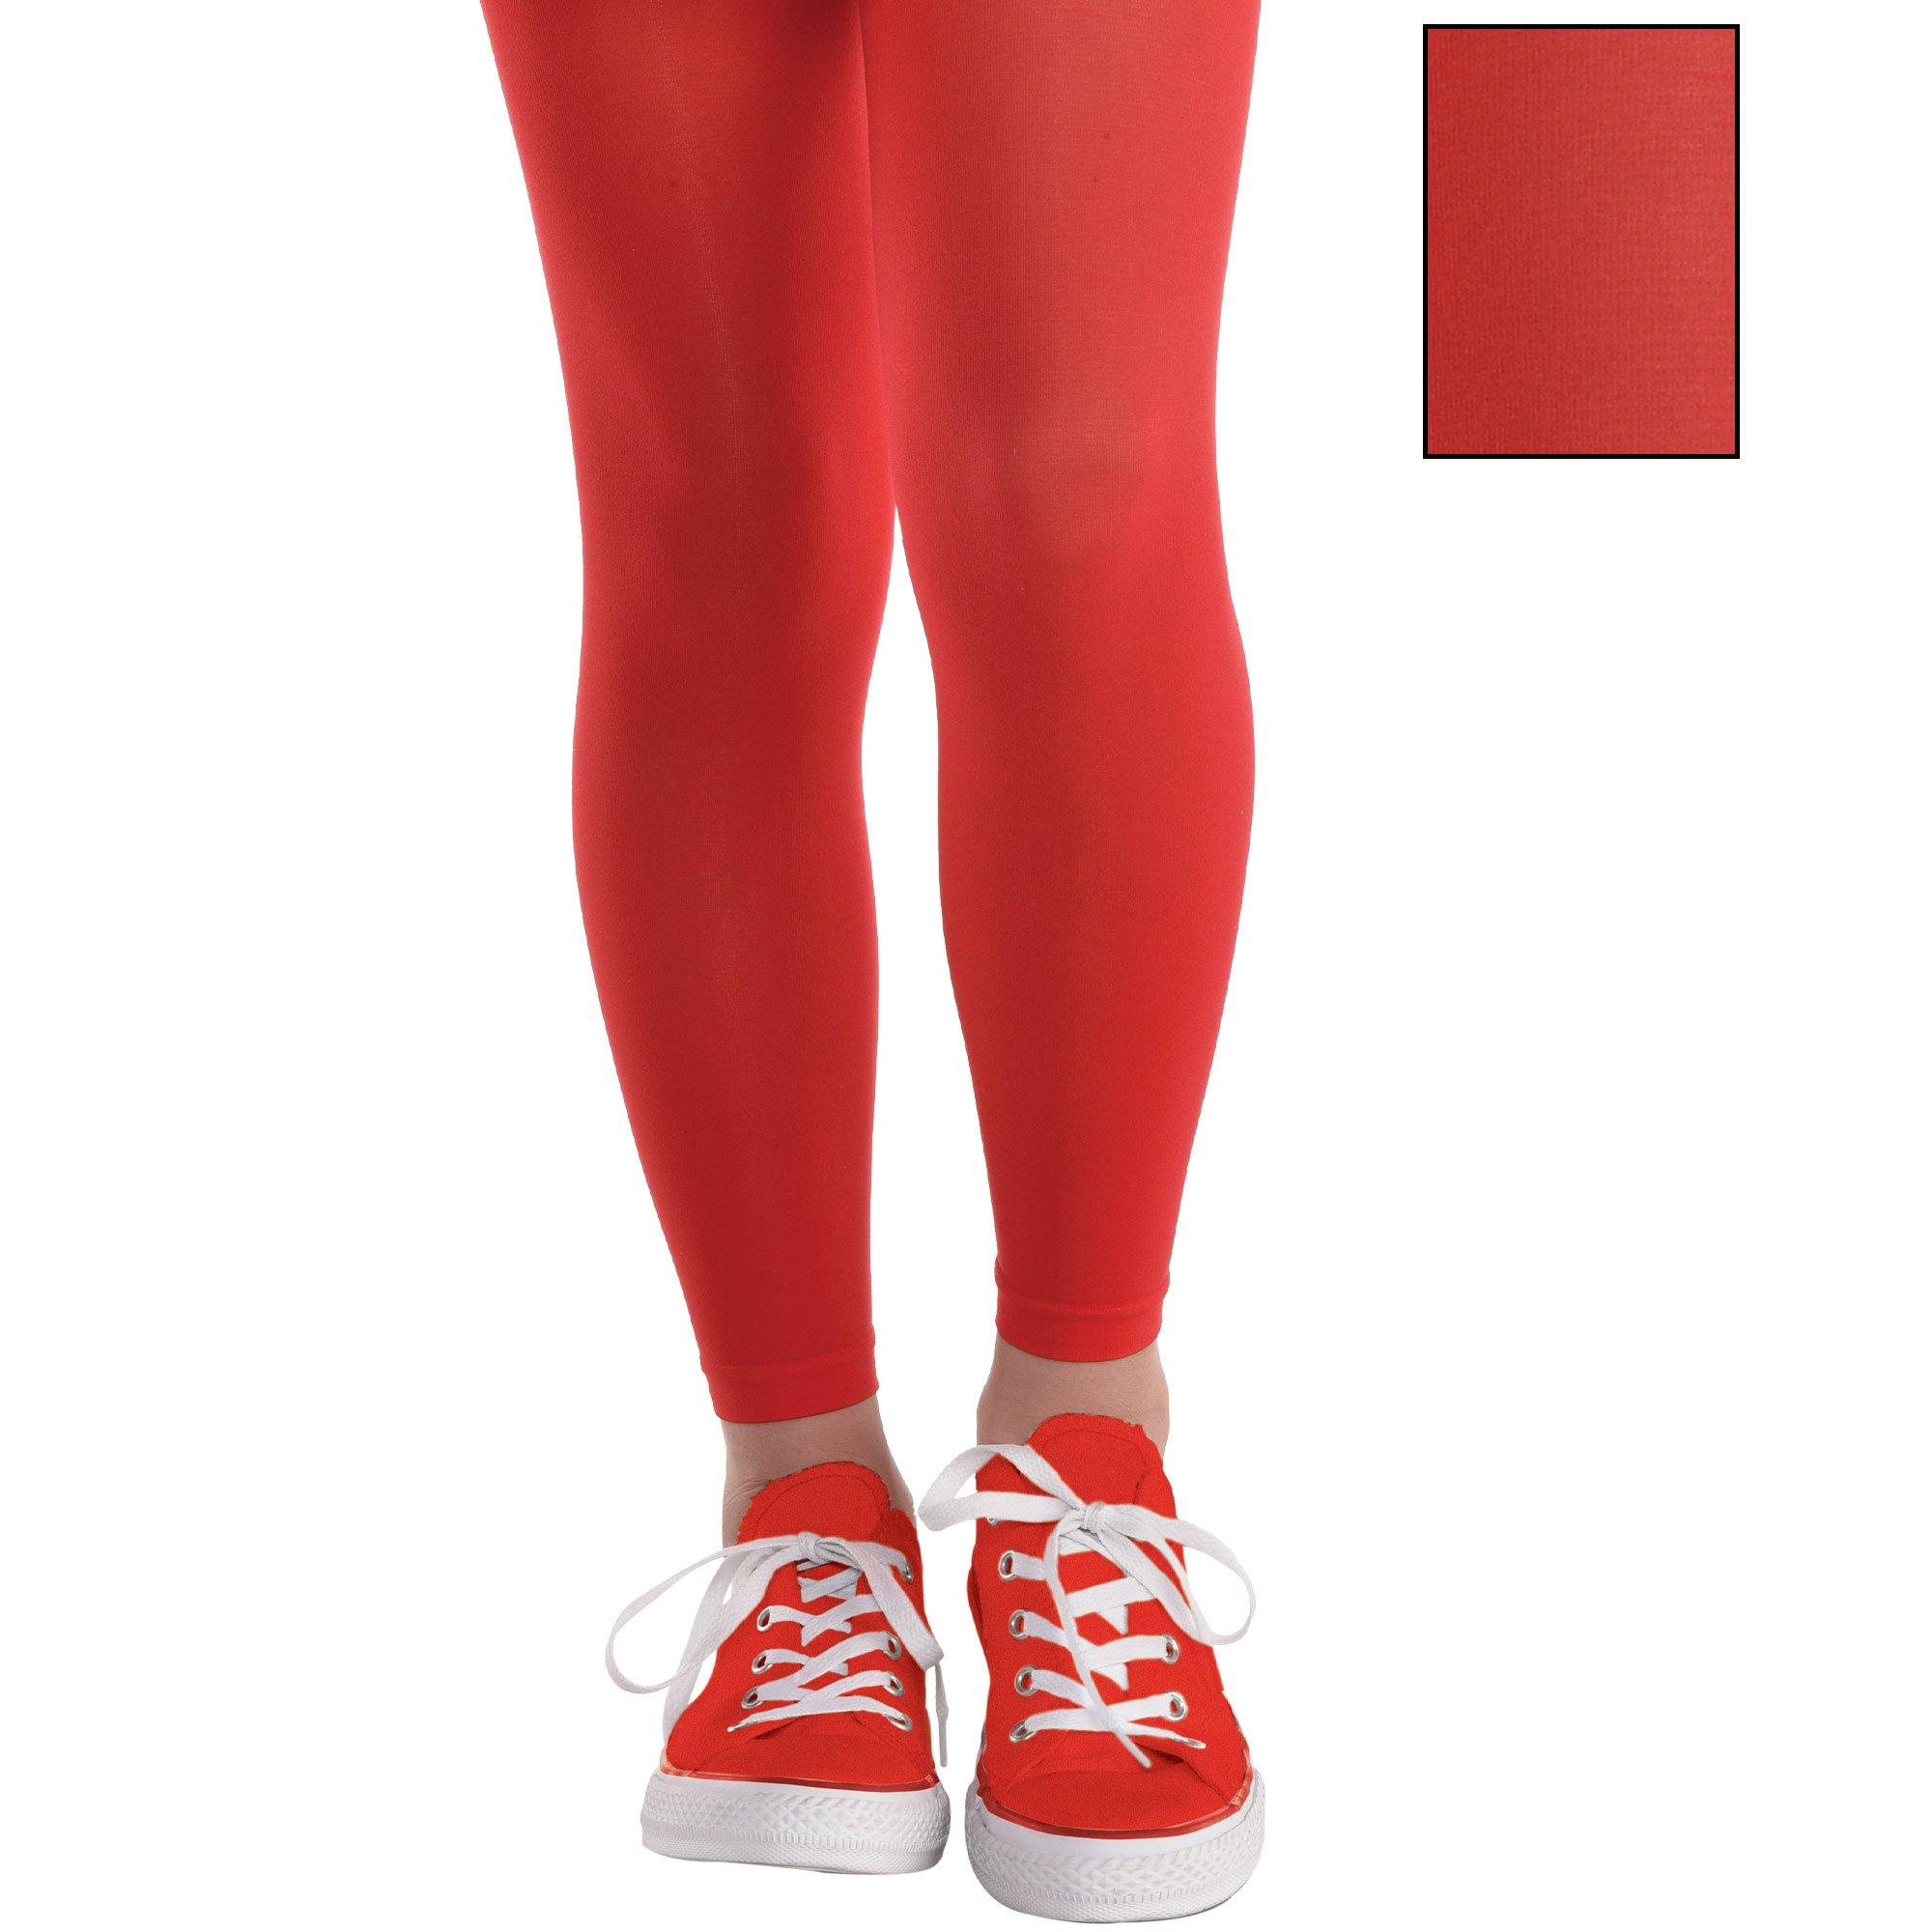 Vivian's Fashions Capri Leggings - Girls, Cotton (Red, Small) 